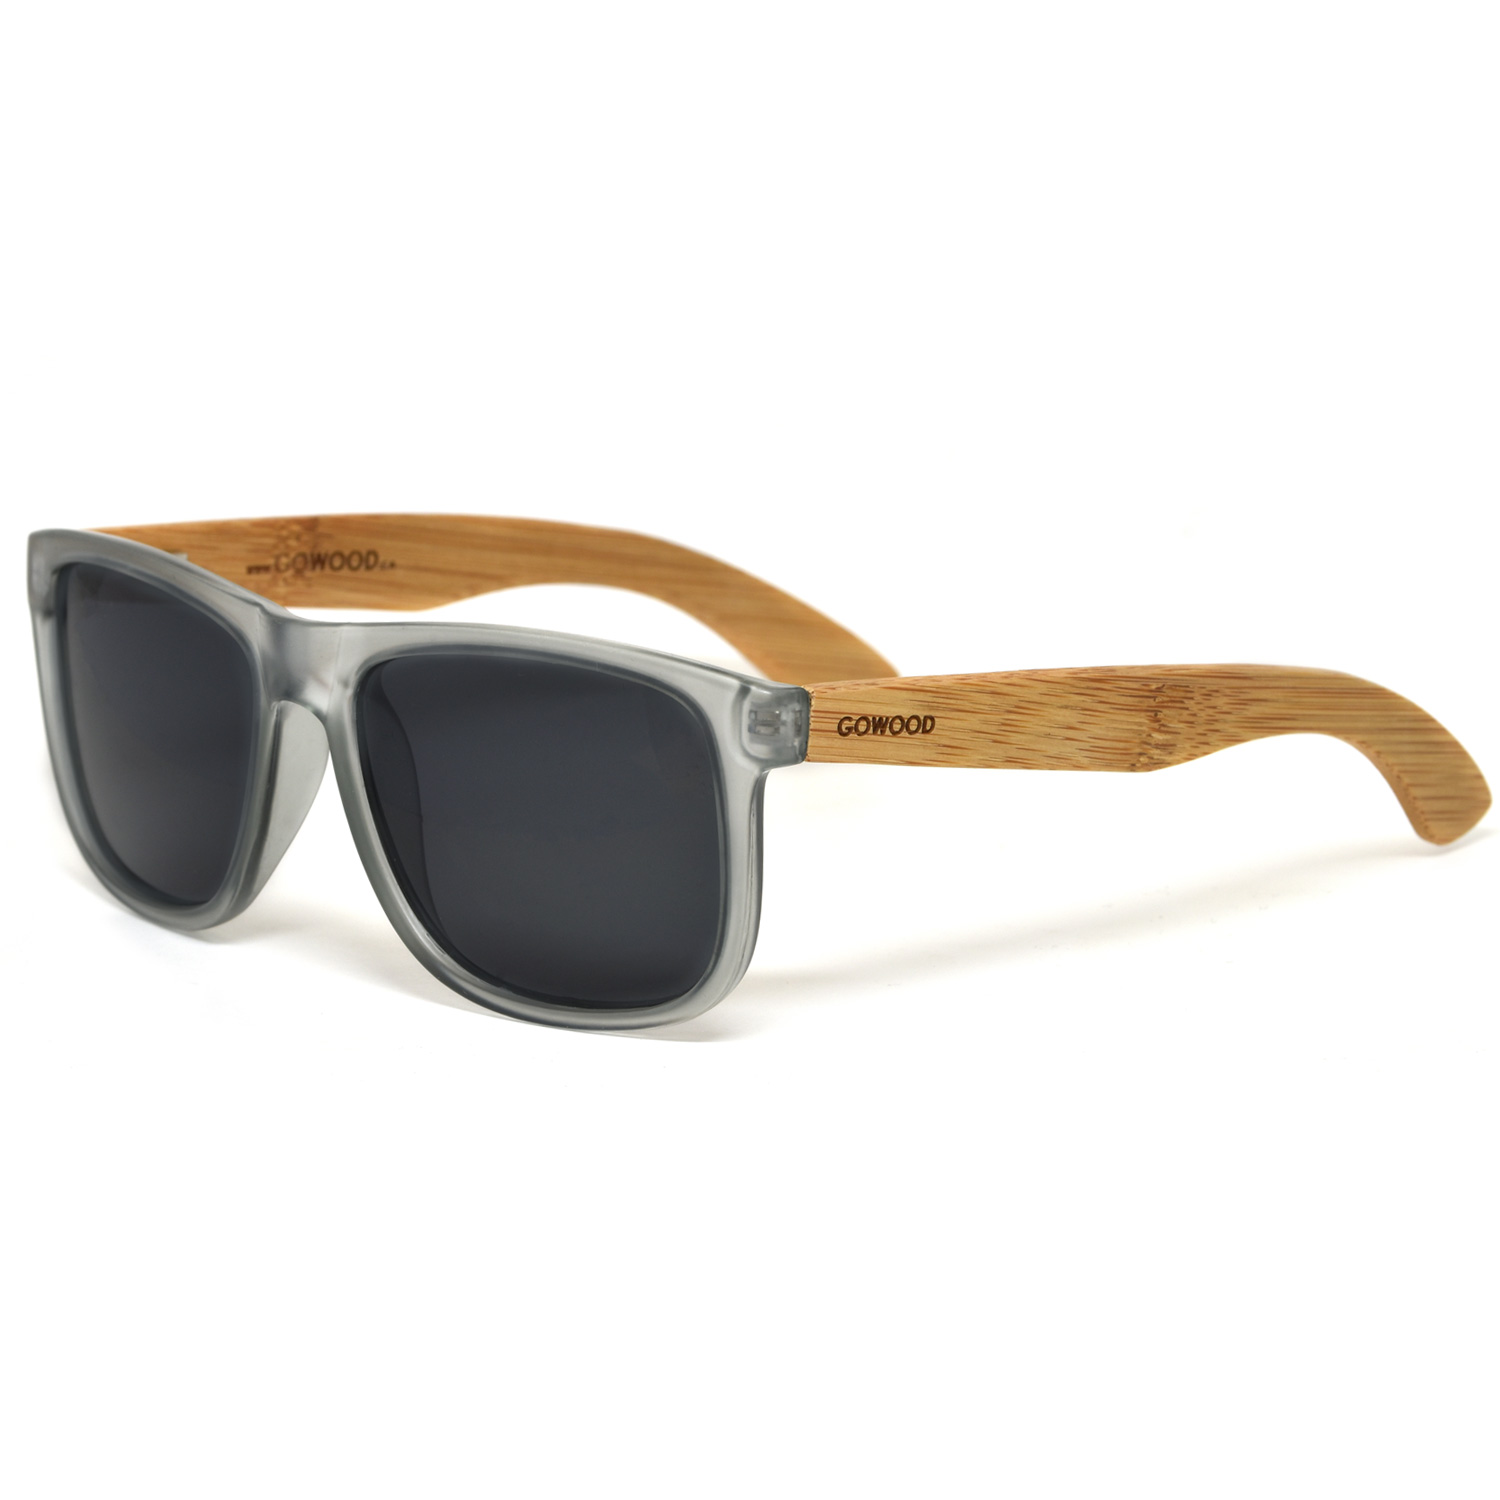 Square bamboo wood sunglasses black polarized lenses